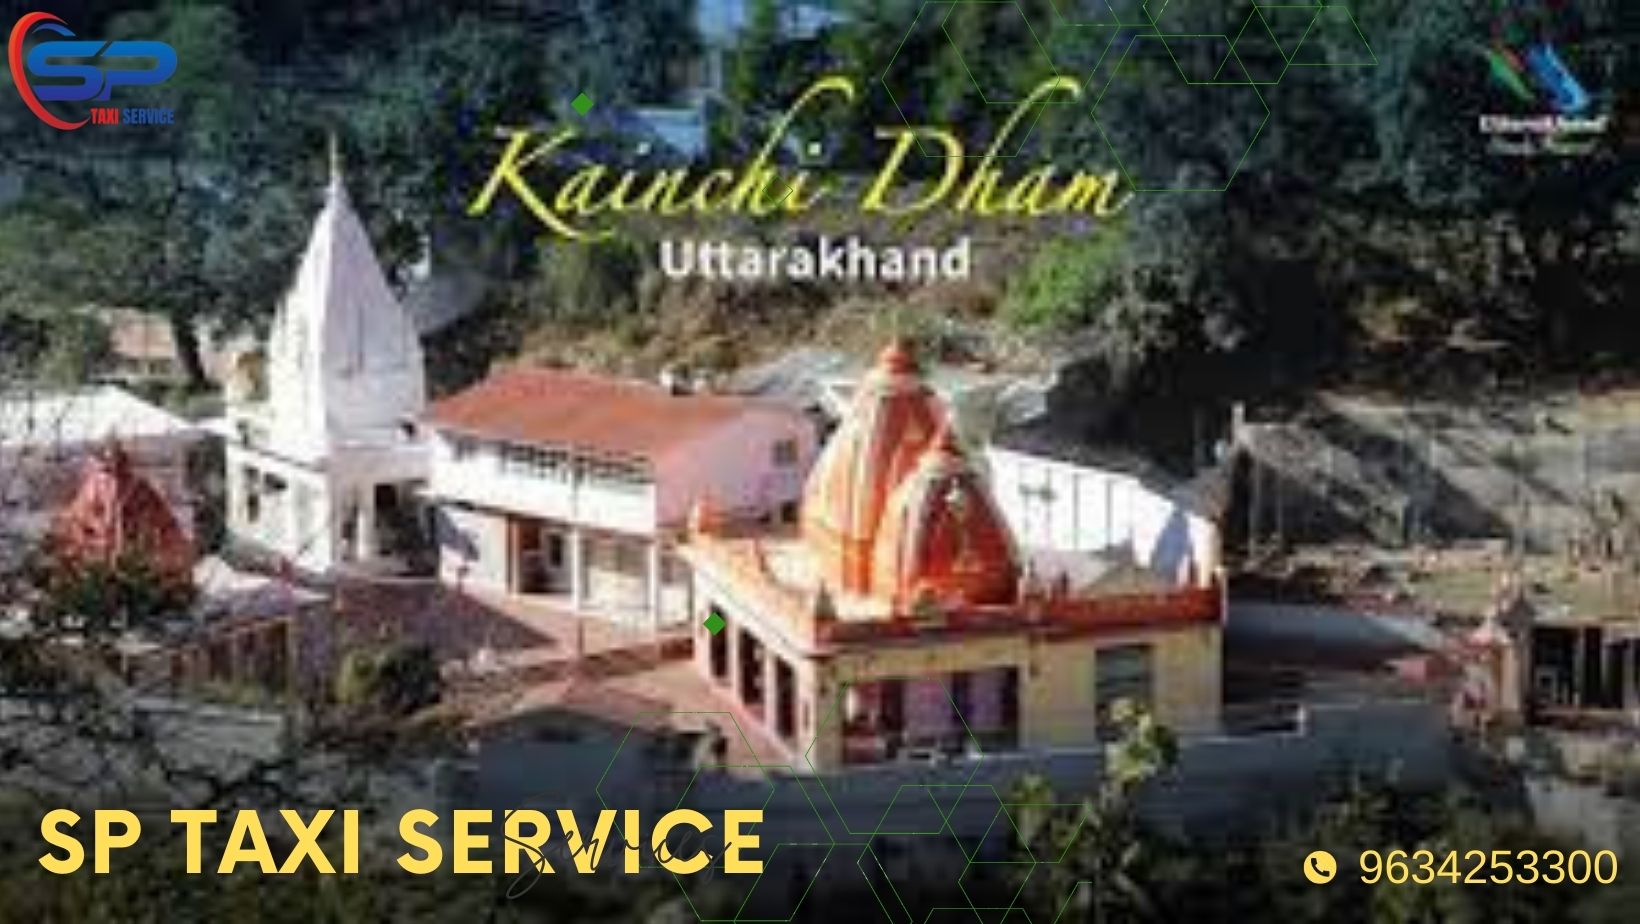 Kainchi dham Taxi service